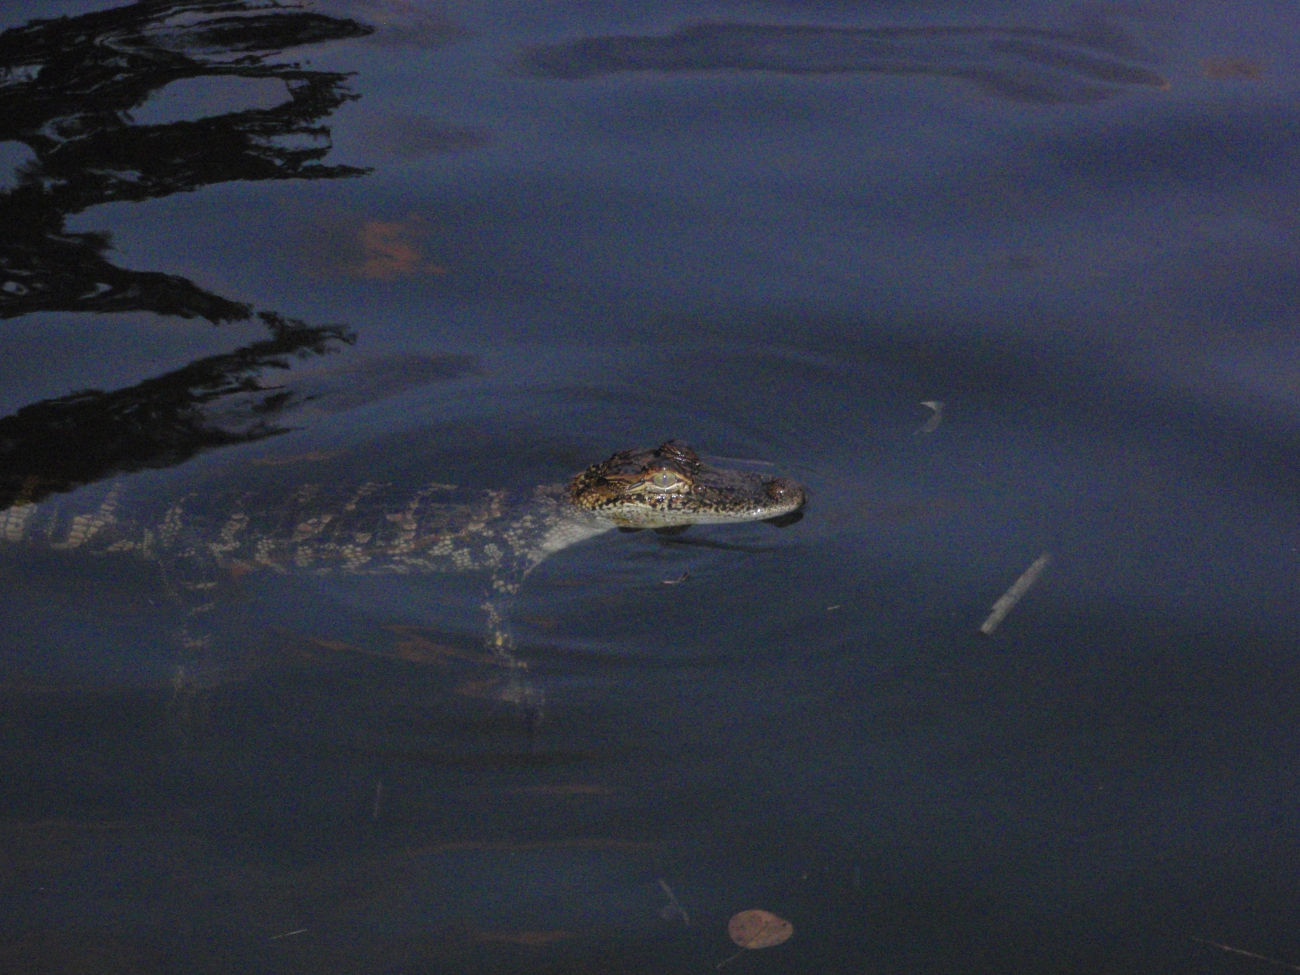 Medium-sized American alligator